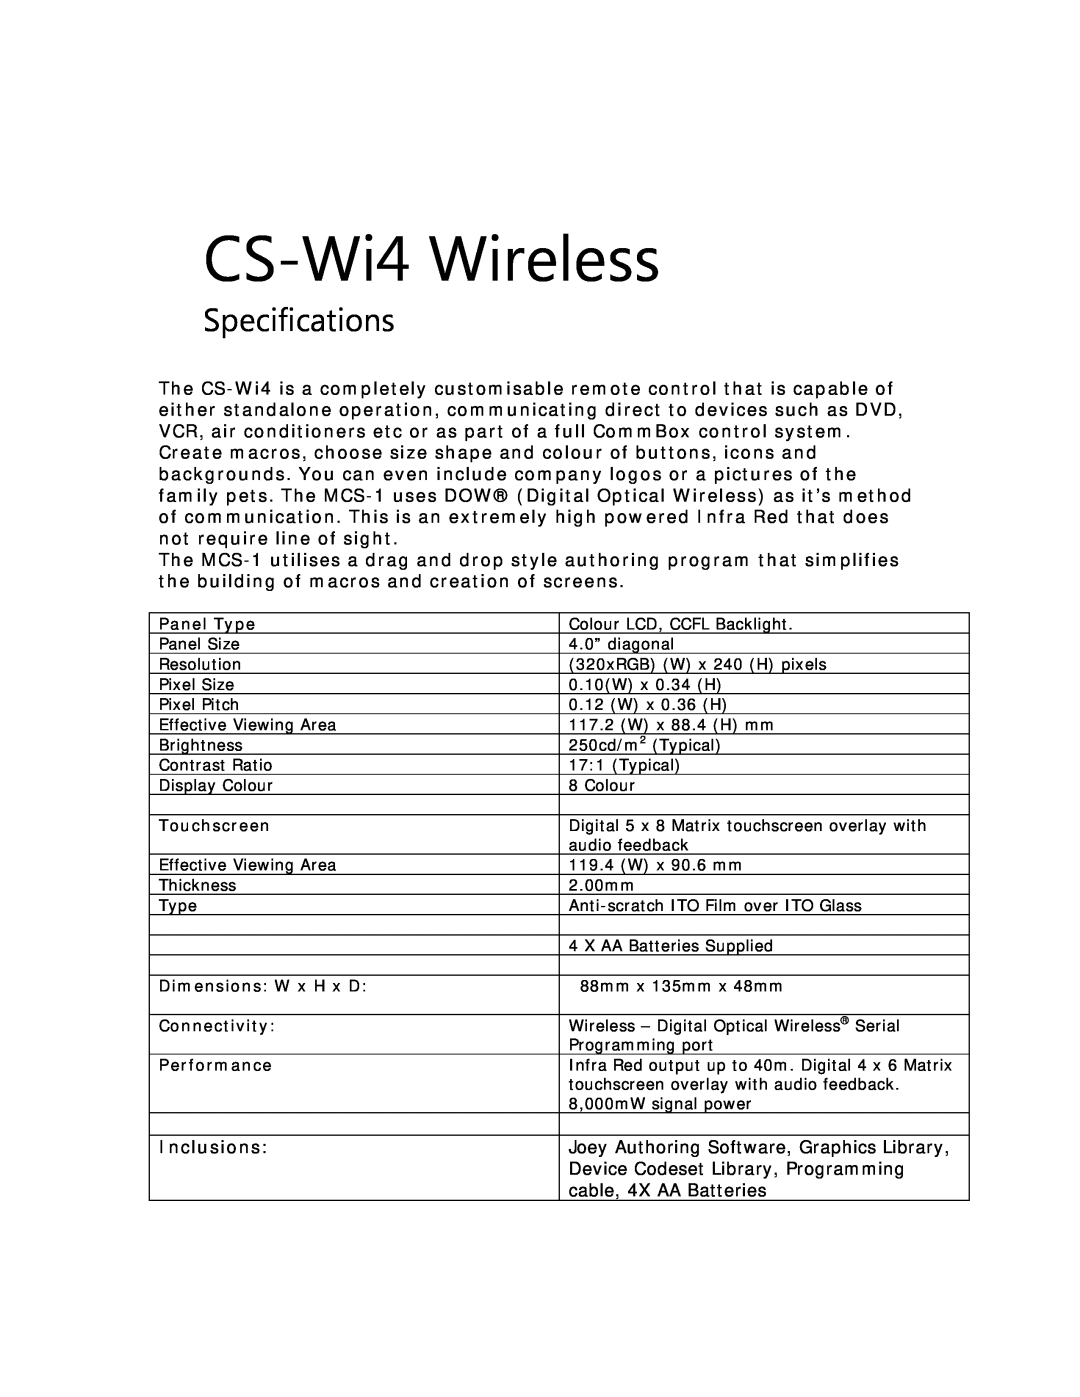 Eiki specifications CS-Wi4 Wireless, Specifications 